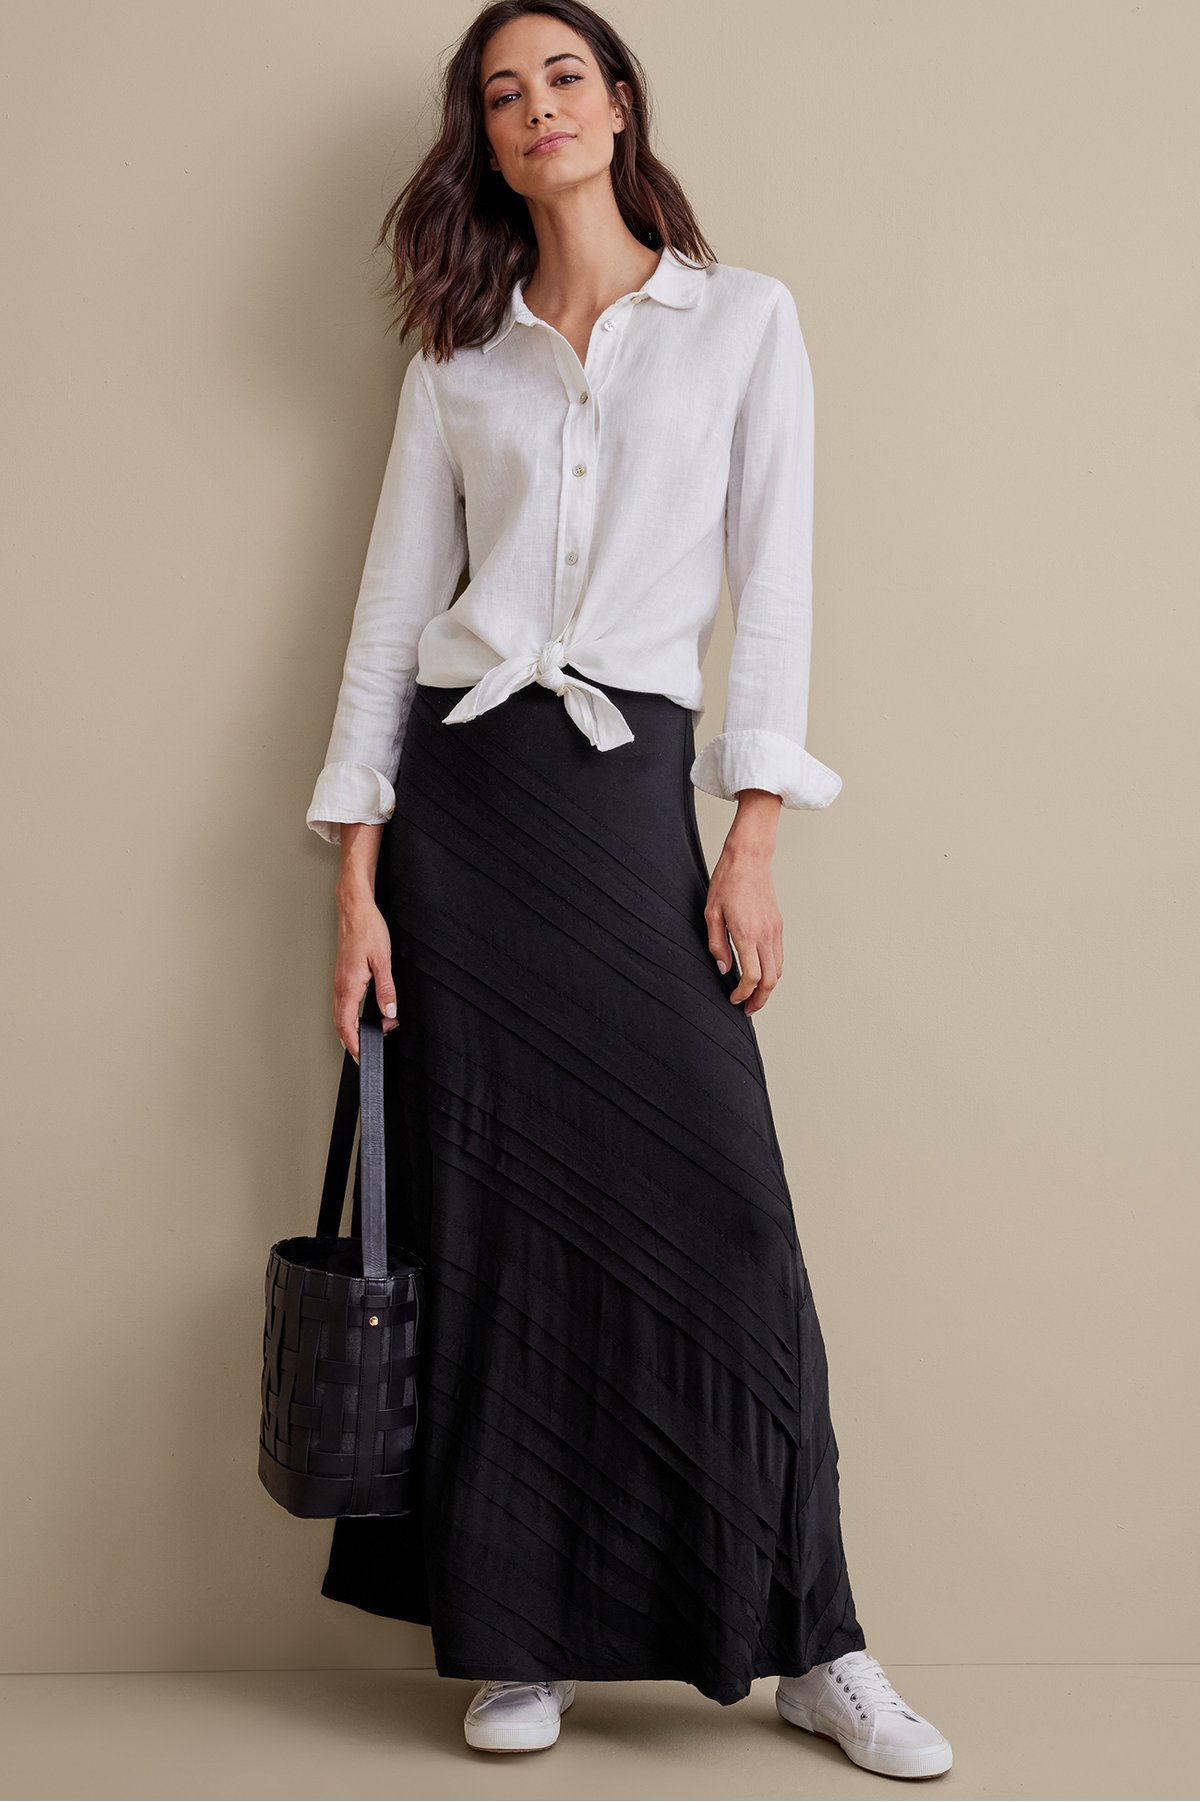 Women's Rosemary Skirt by Soft Surroundings, in Black size M (10-12)